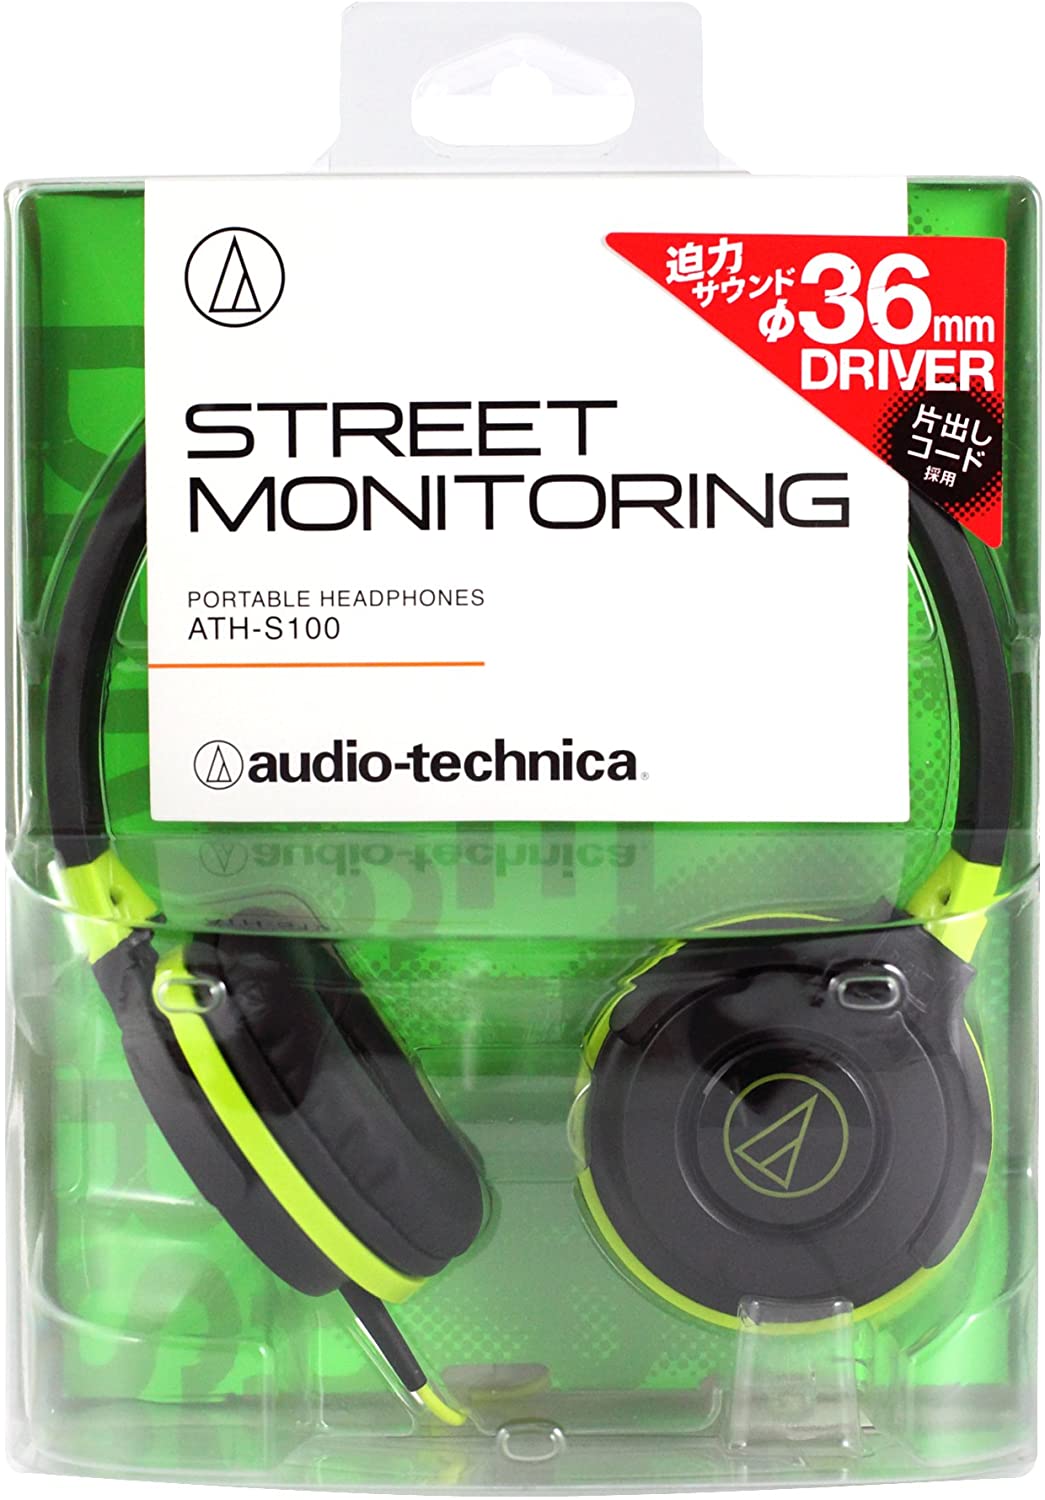 Audio-technica STREET MONITORING sealed on-ear headphones ATH-S100